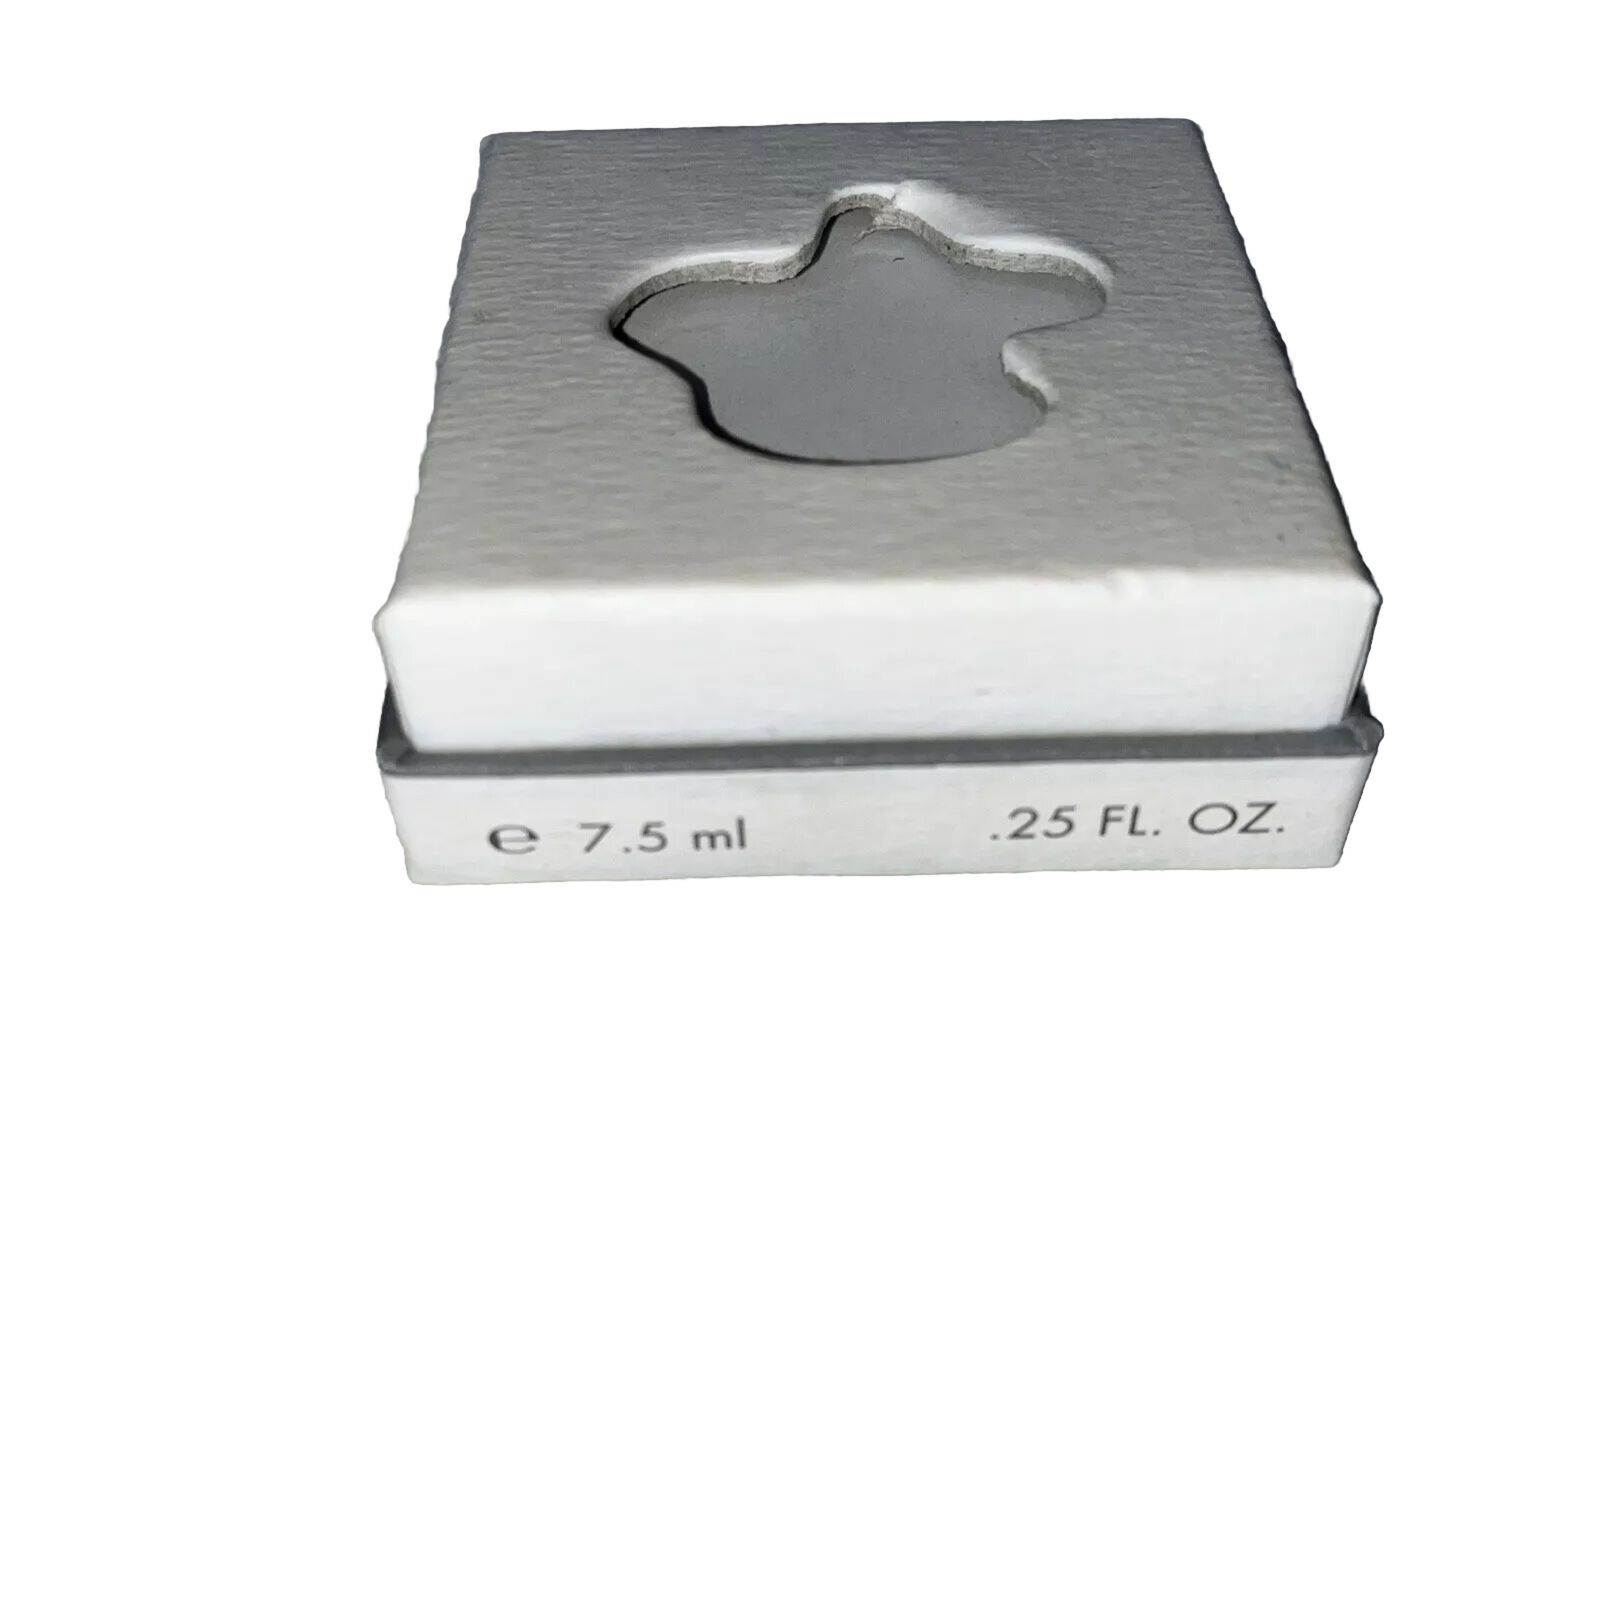 Vintage Box Oscar de la Renta OSCAR Real Perfume ¼ 0.25 Oz 7.5ml Box